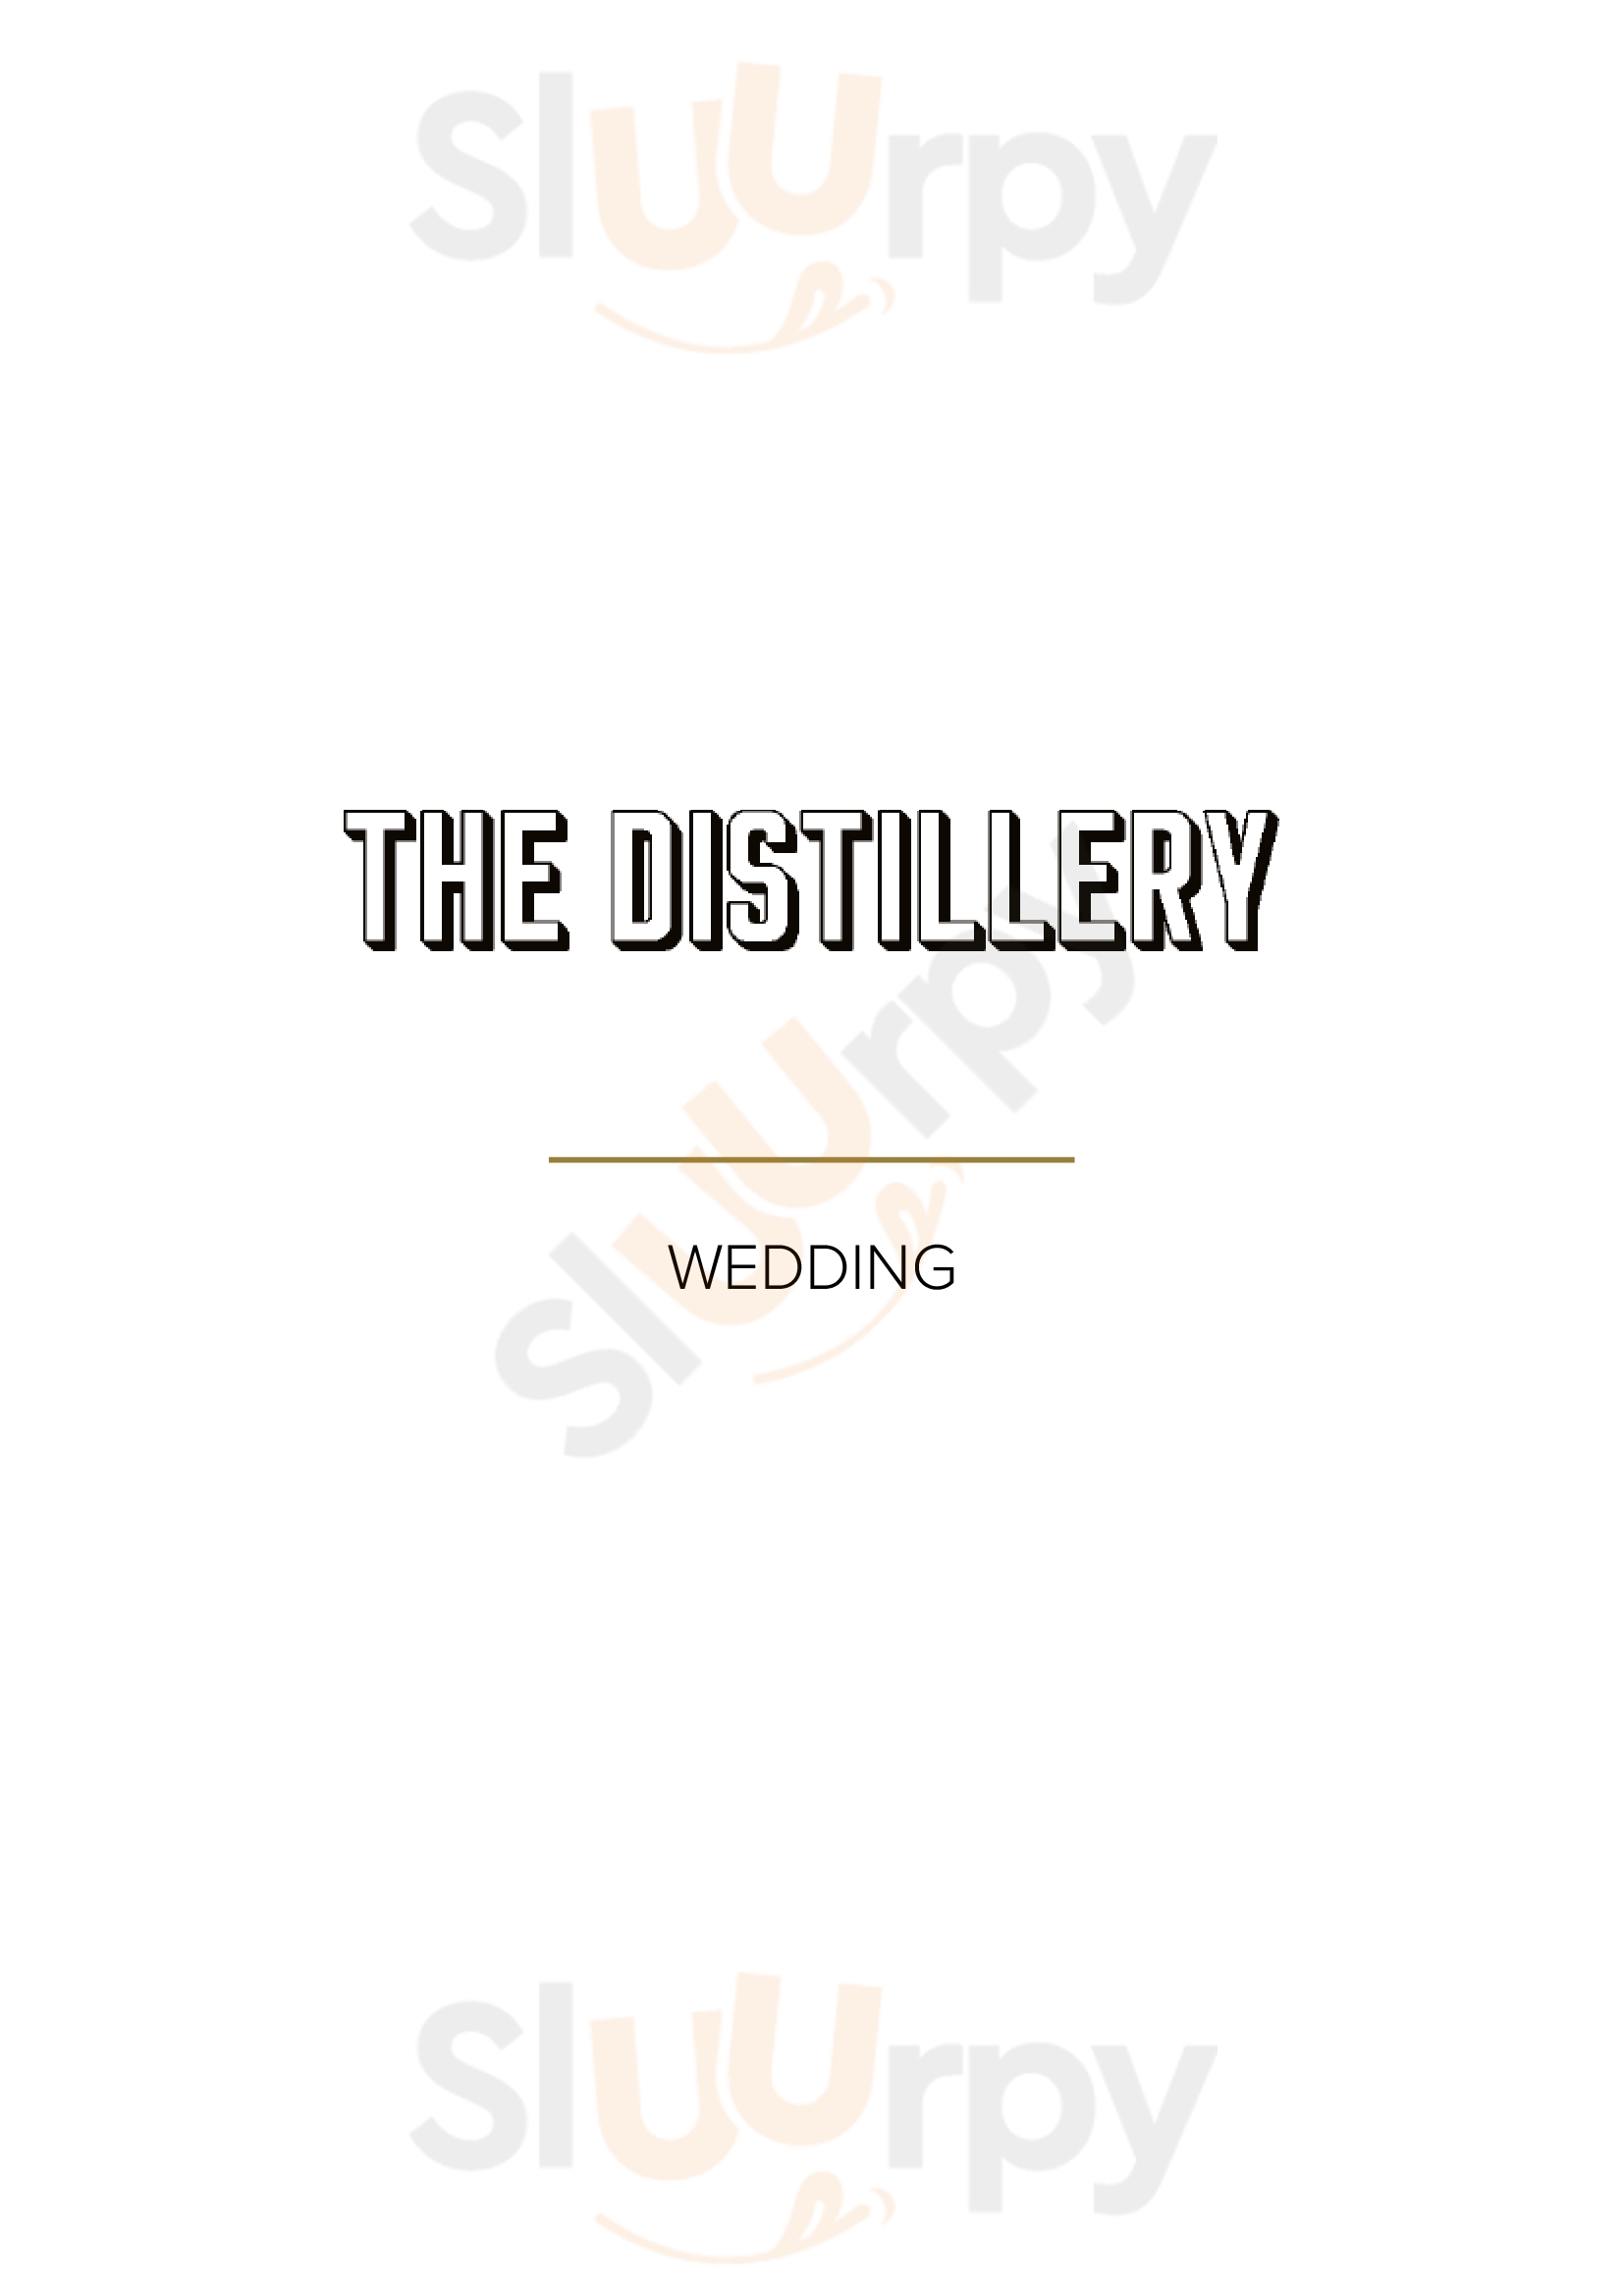 The Distillery Birmingham Menu - 1